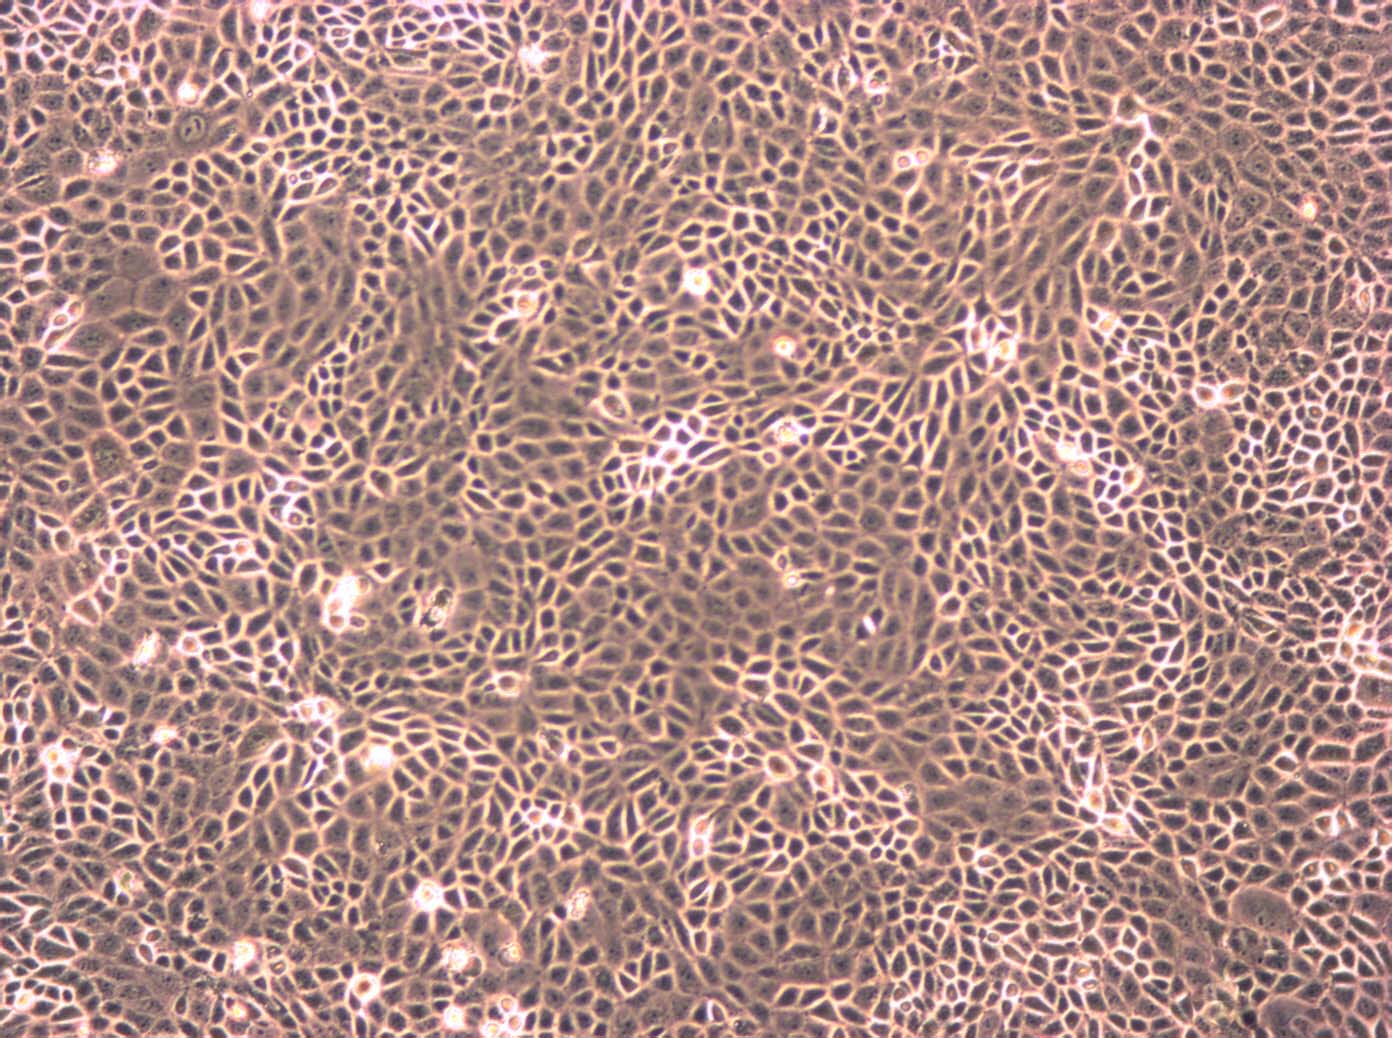 KYSE-140 Cells(赠送Str鉴定报告)|人食管鳞癌细胞,KYSE-140 Cells